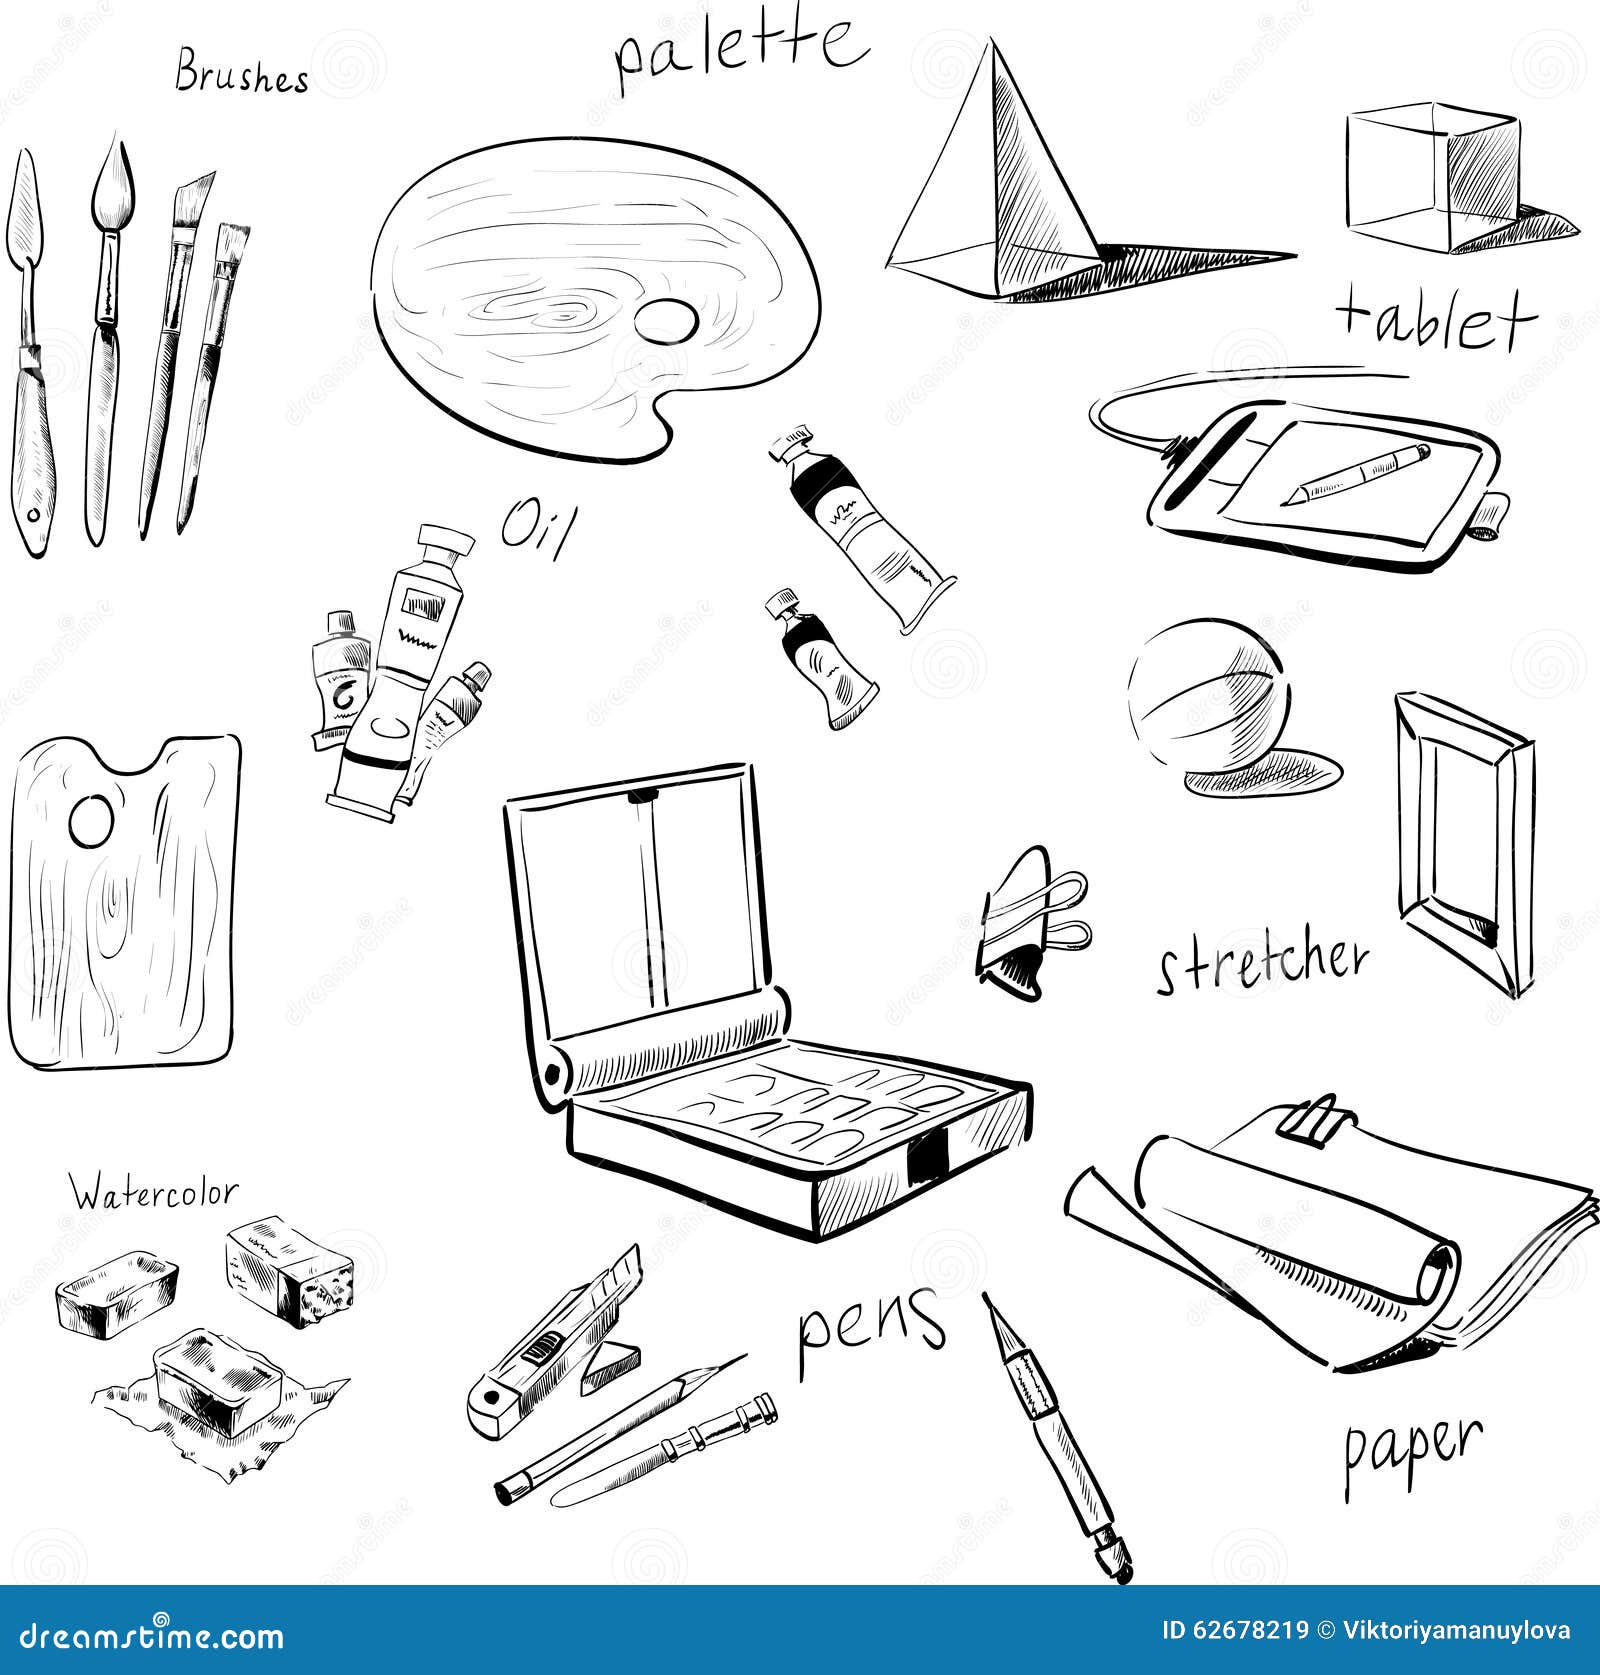 https://thumbs.dreamstime.com/z/sketch-vector-set-art-materials-hand-drawn-illustration-62678219.jpg